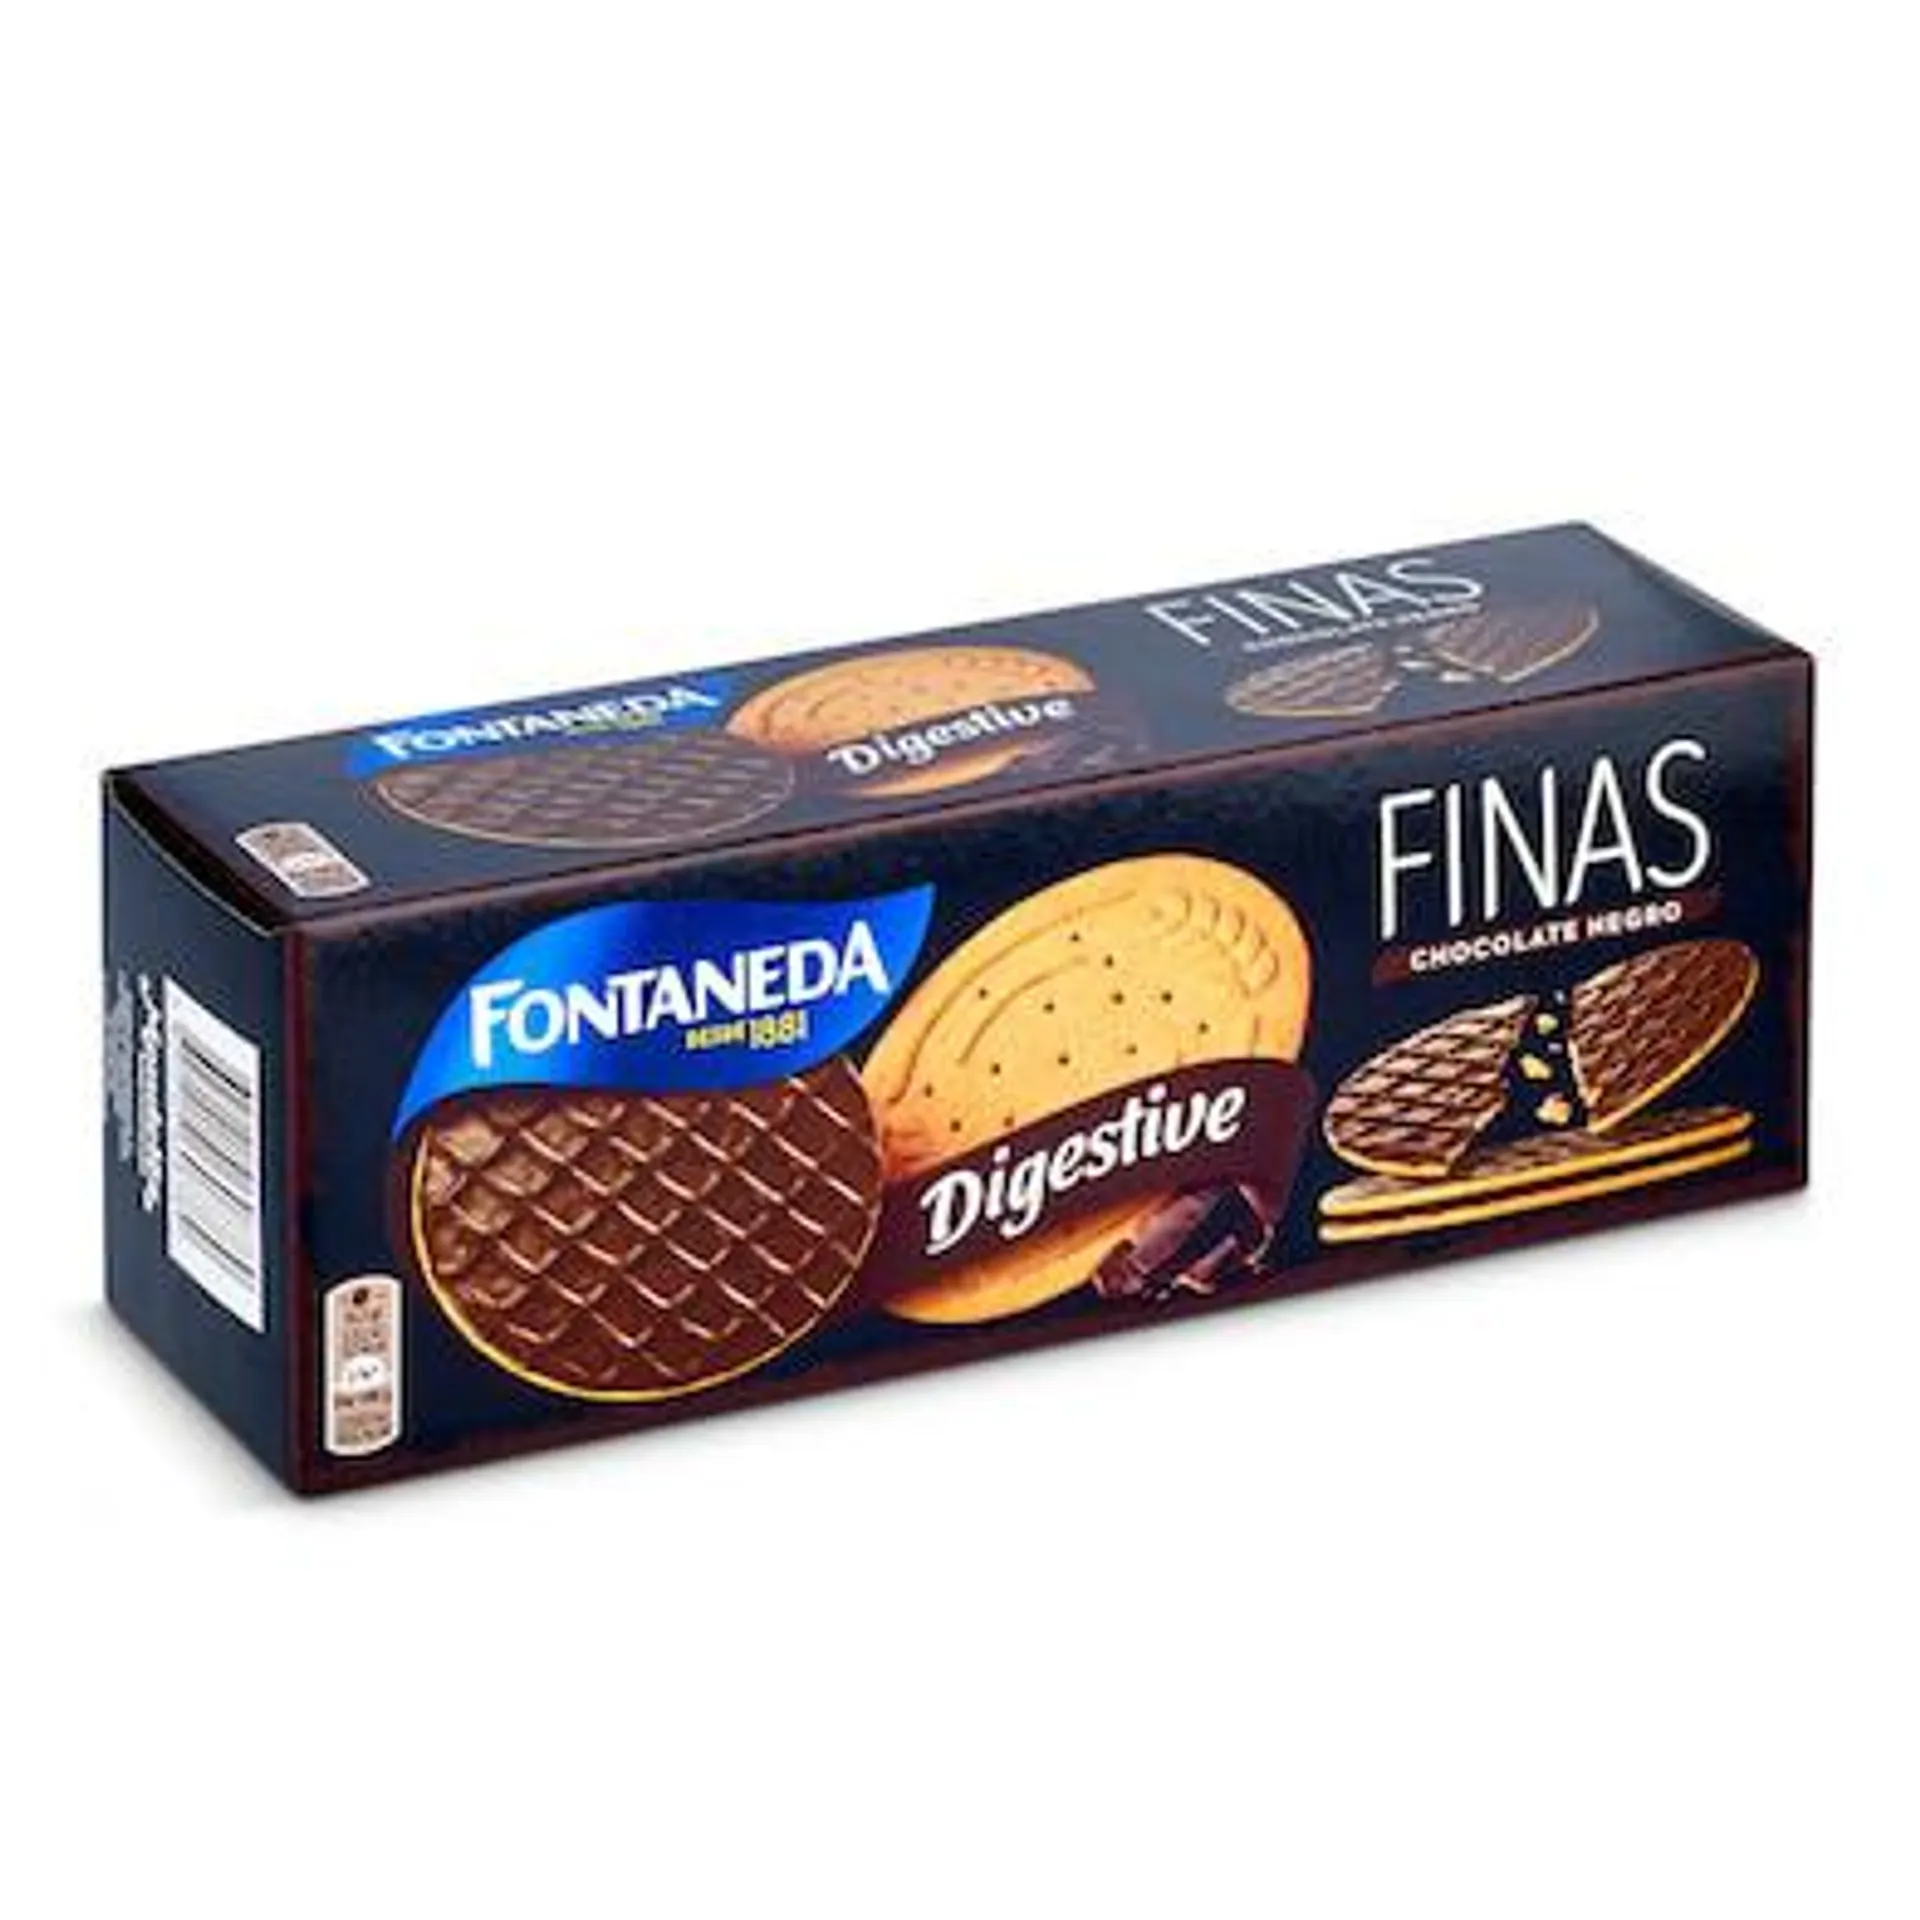 Galletas digestive finas con chocolate negro FONTANEDA CAJA 170 GR